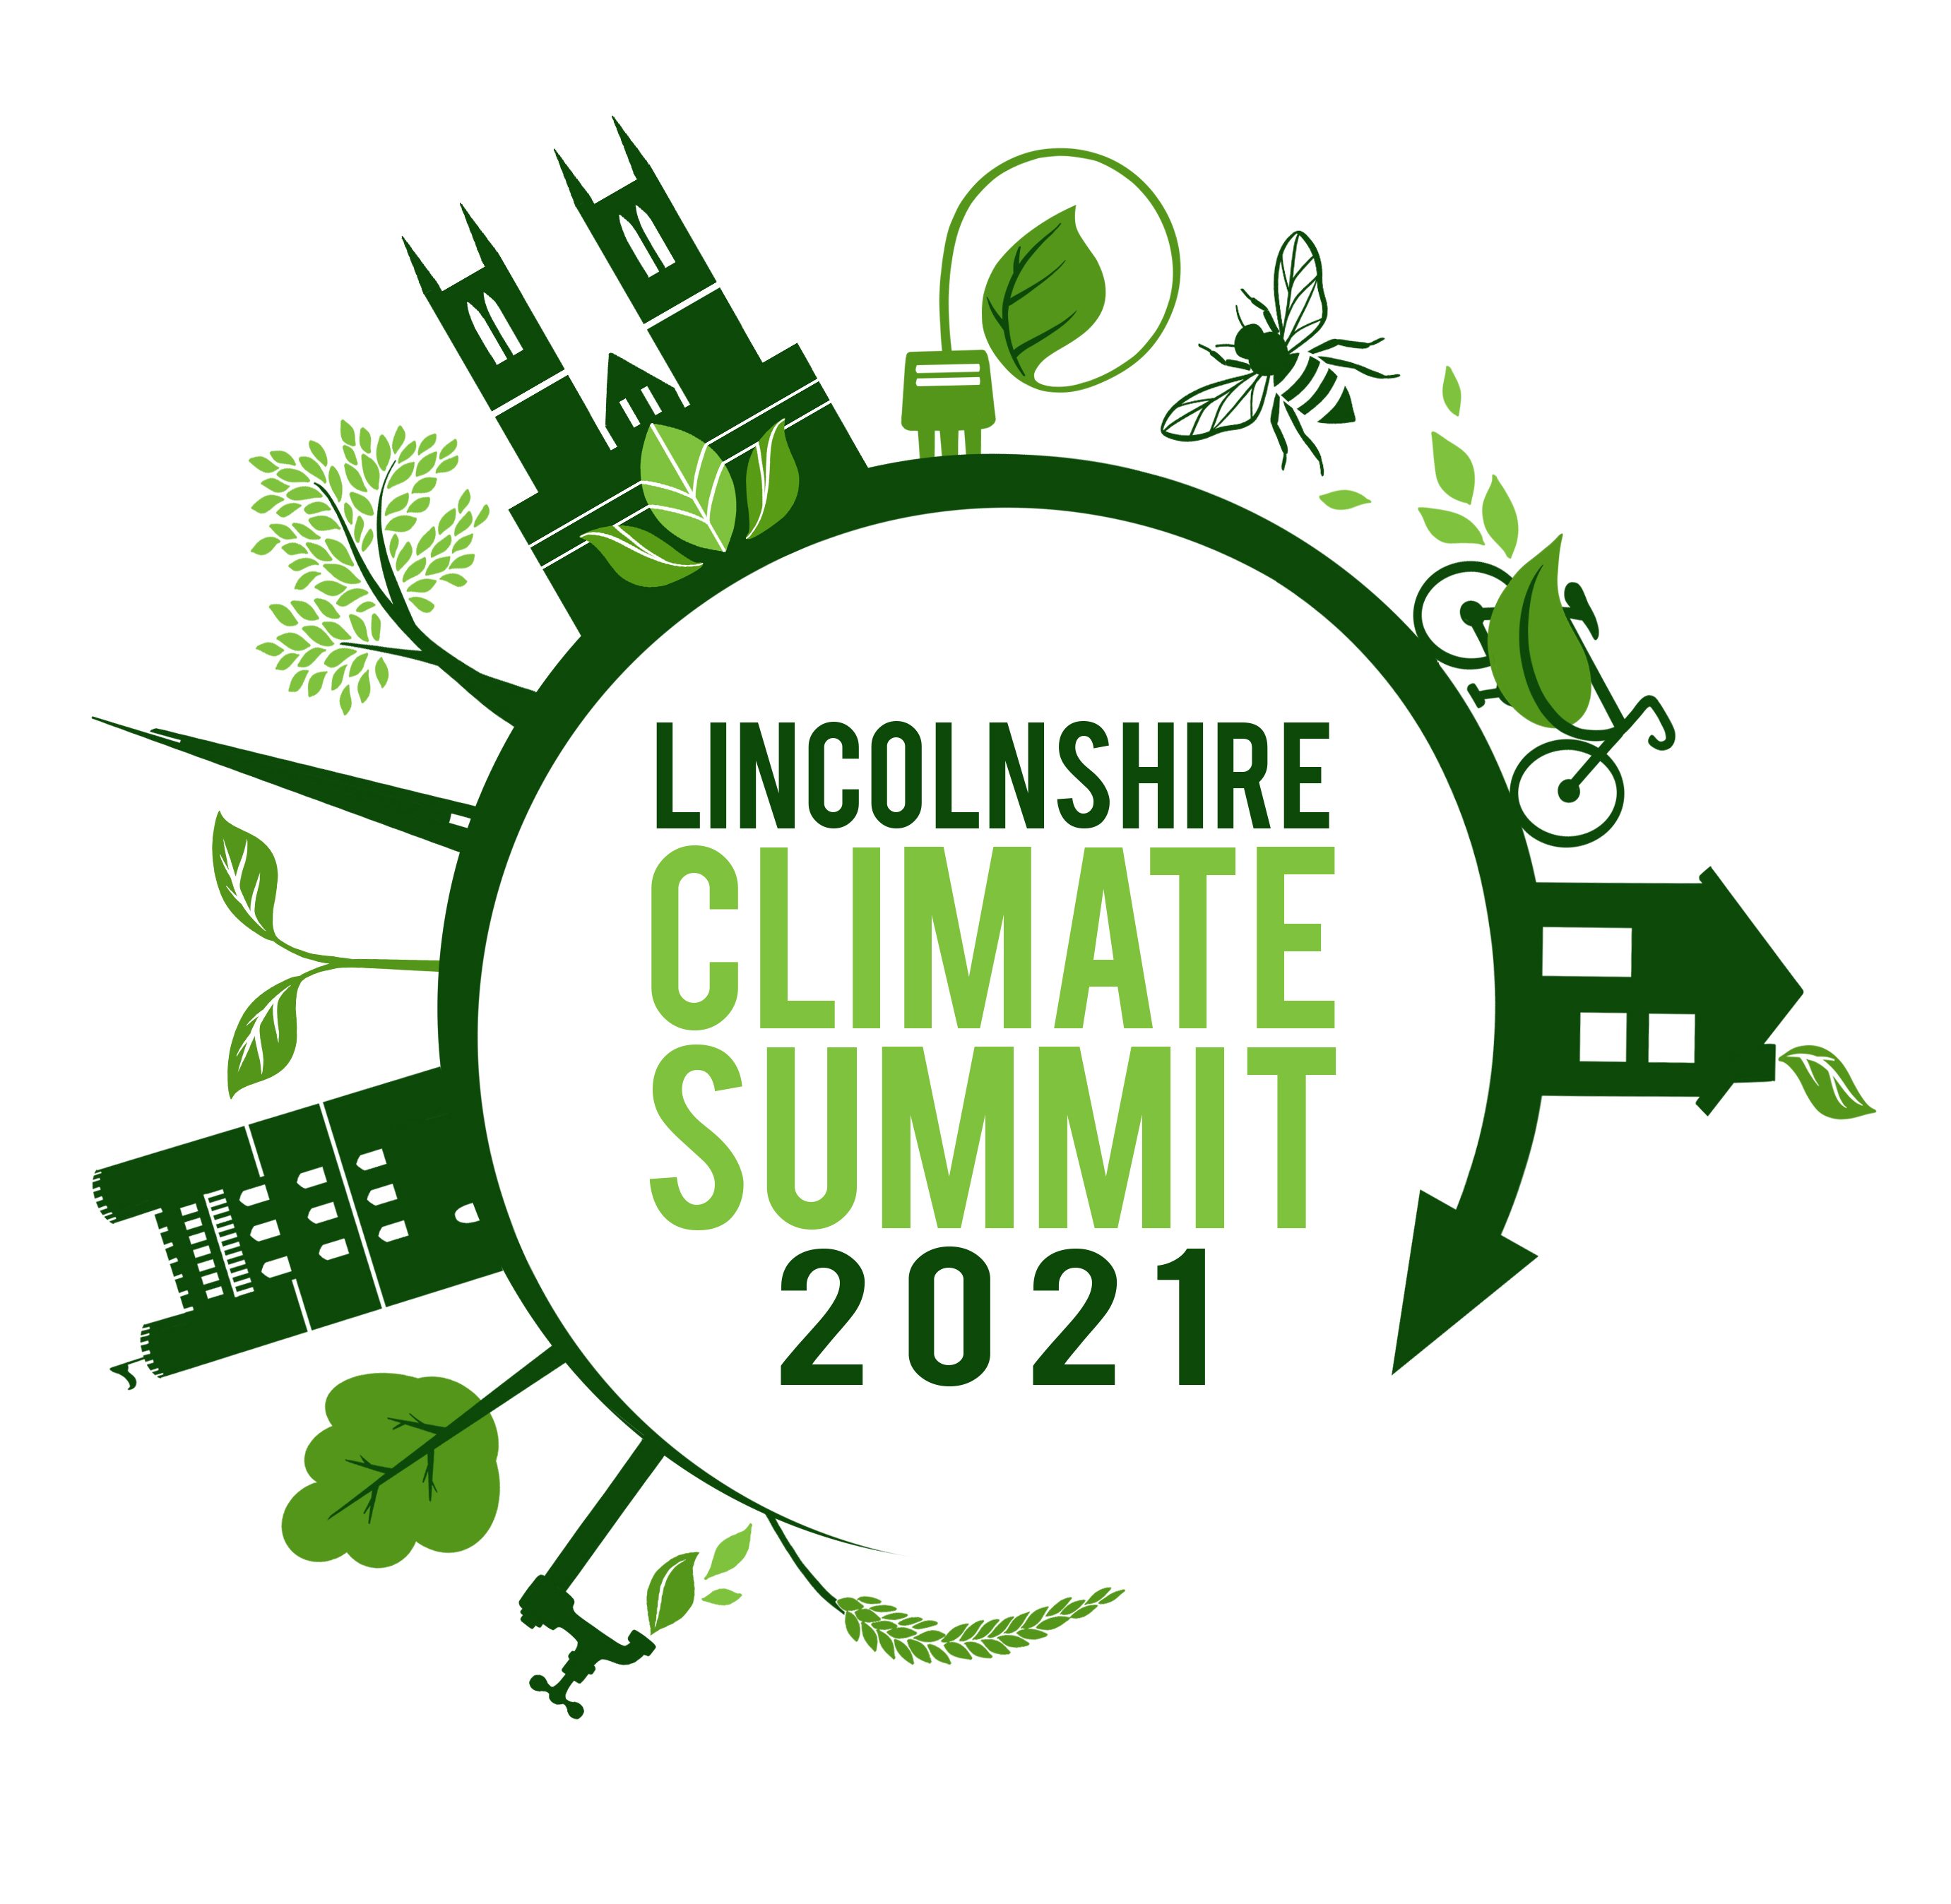 Lincolnshire Climate Summit 2021 logo